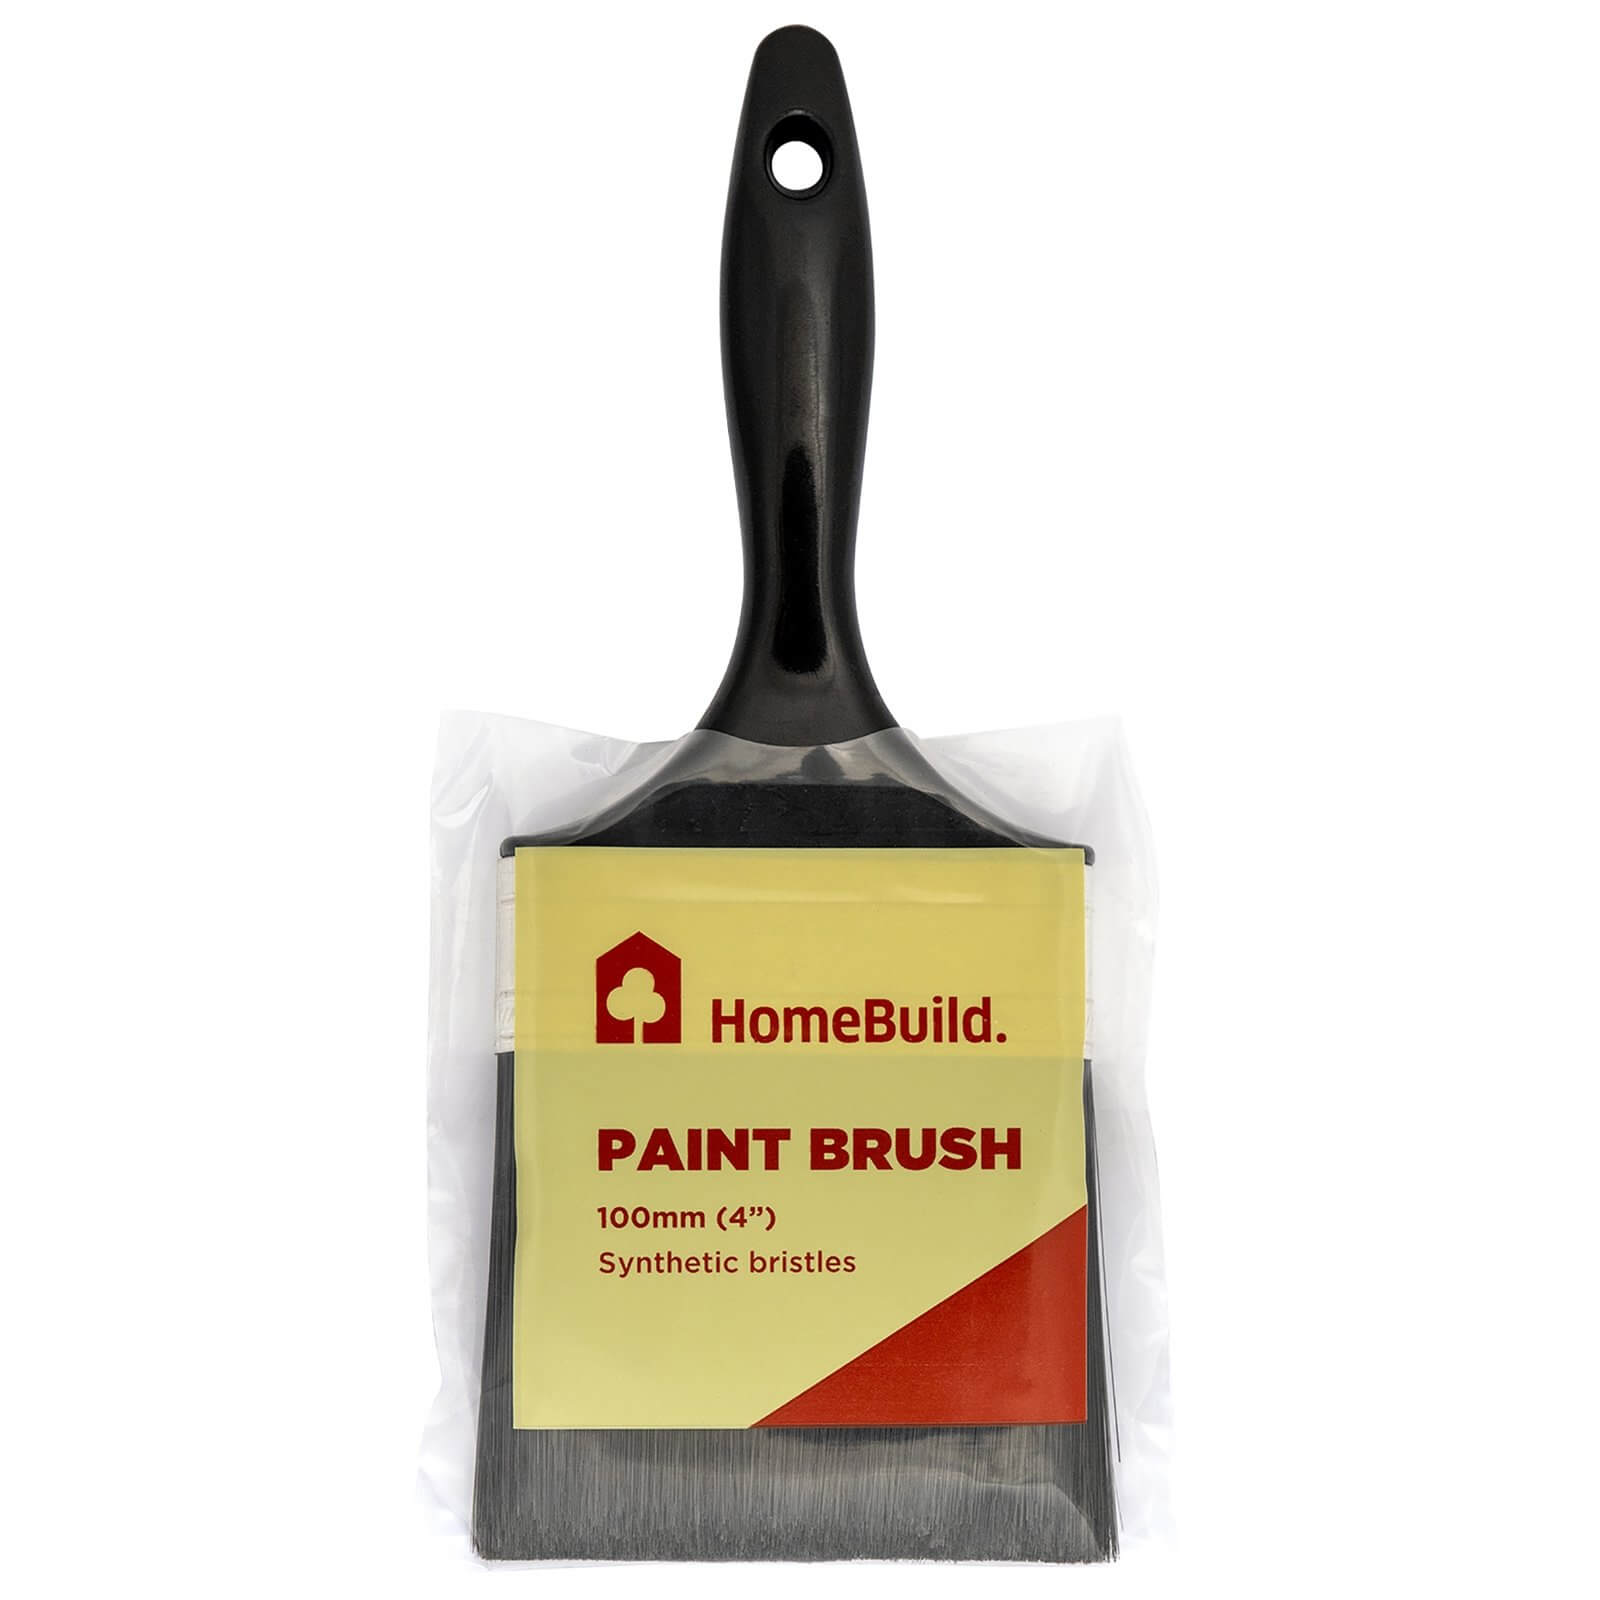 HomeBuild Paint Brush Hollow - 100mm